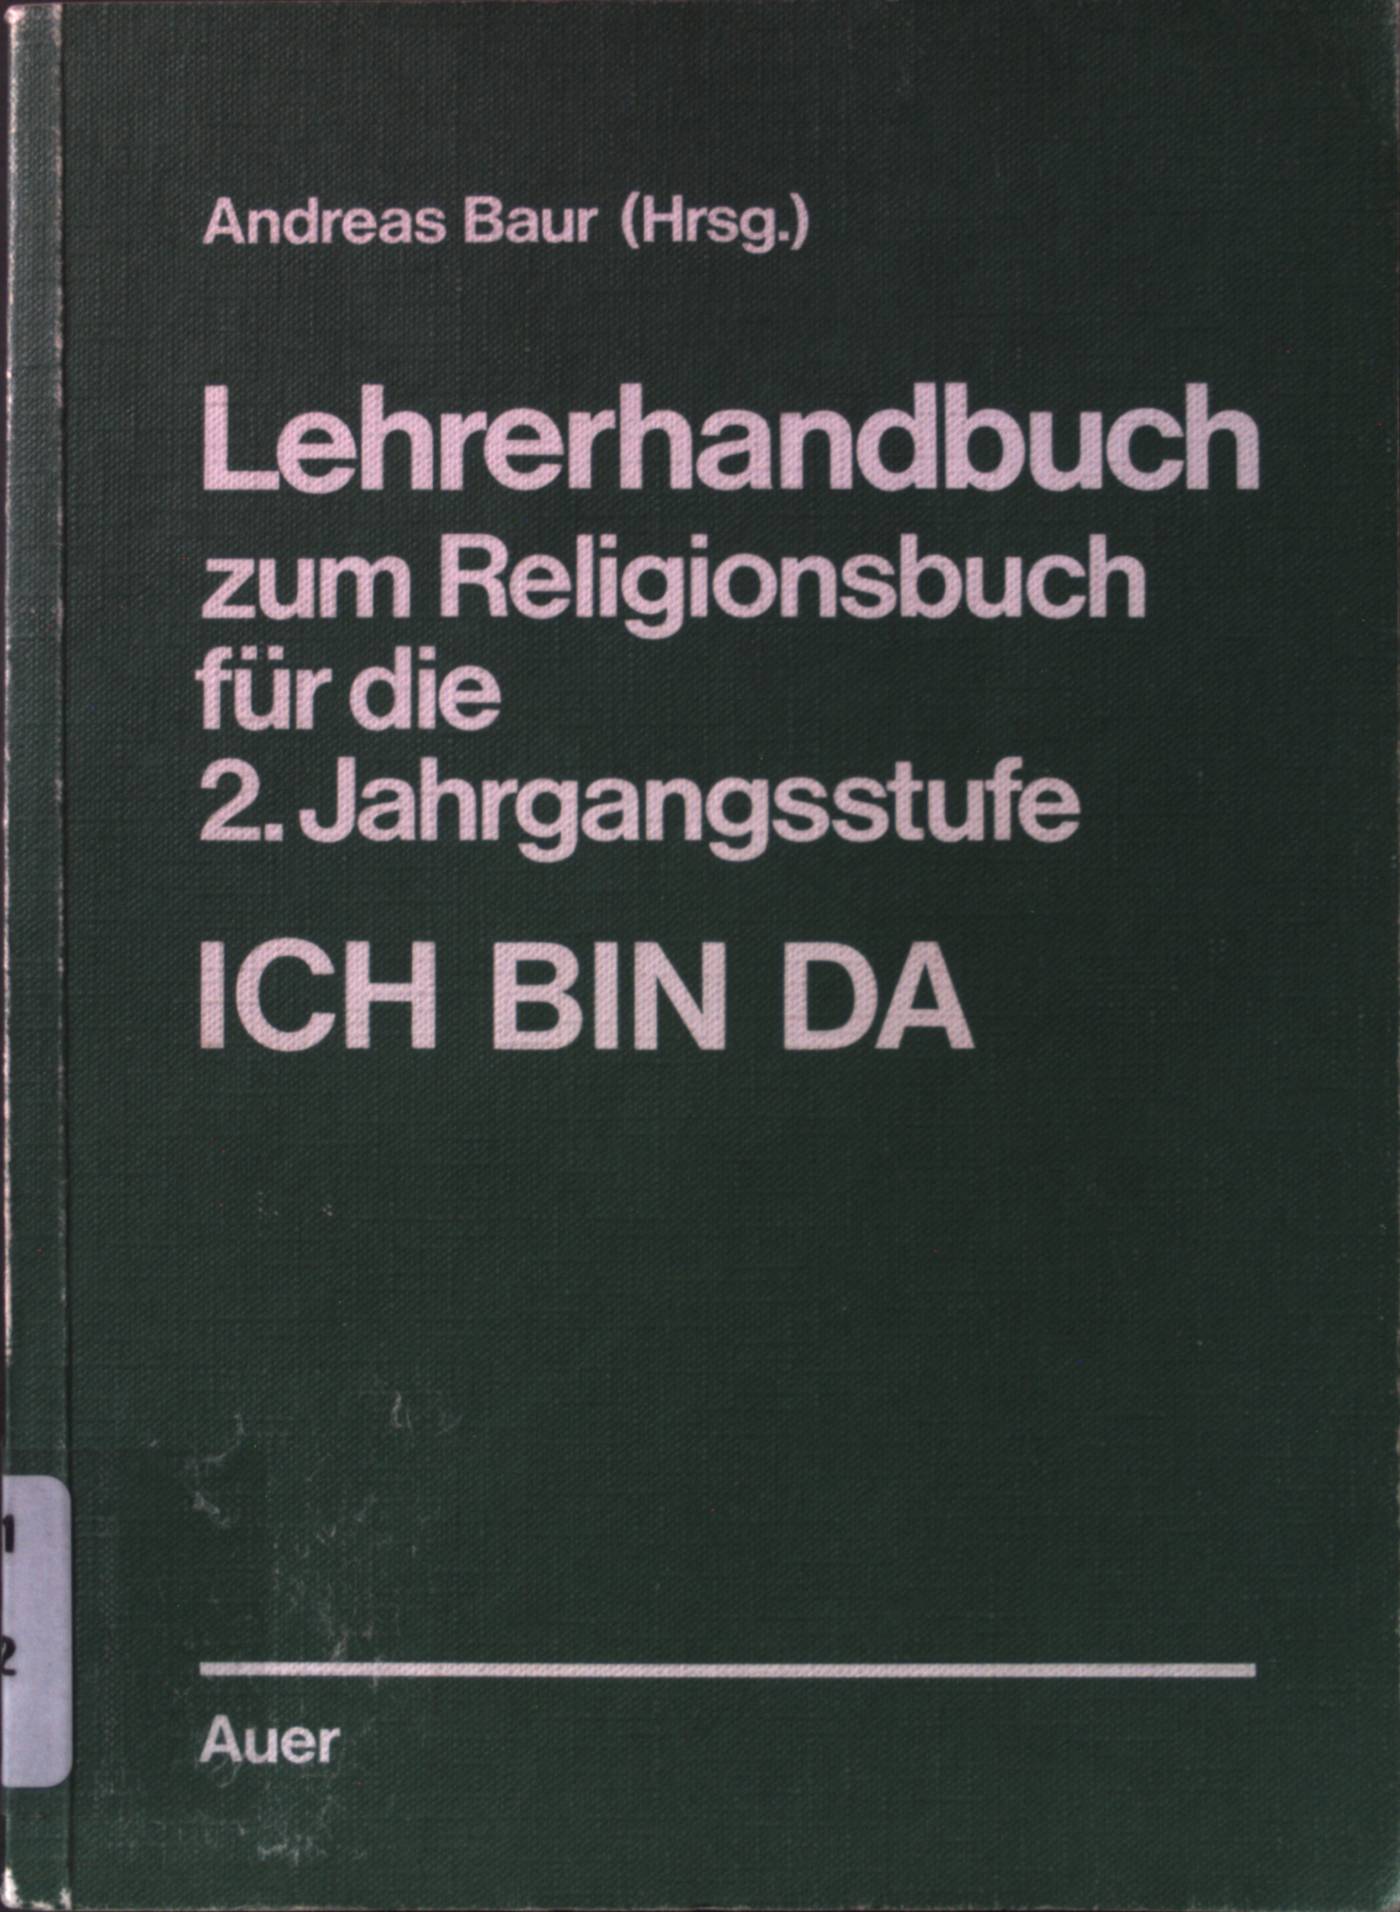 Lehrerhandbuch zum Religionsbuch für die 2. Jahrgangsstufe: Ich bin da.  4 Auflage; - Baur, Andreas, Carina Auth Maria Knoll u. a.